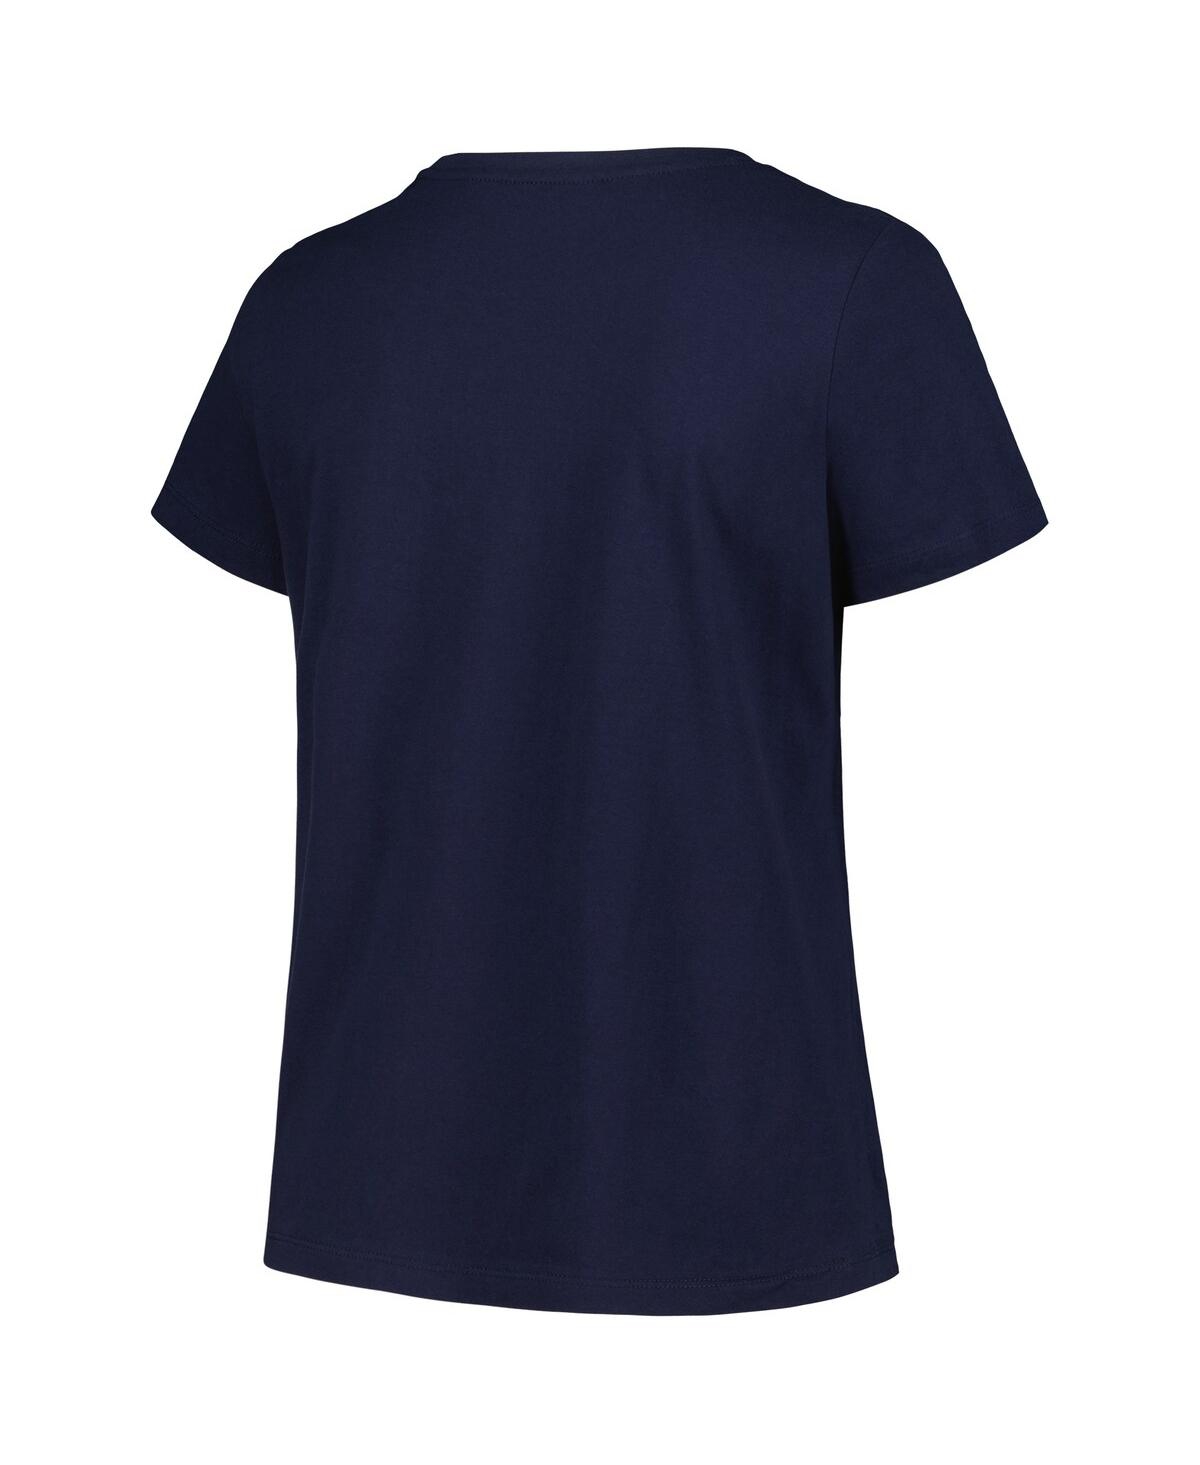 Shop Profile Women's  Navy Michigan Wolverines Plus Size Arch Over Logo Scoop Neck T-shirt